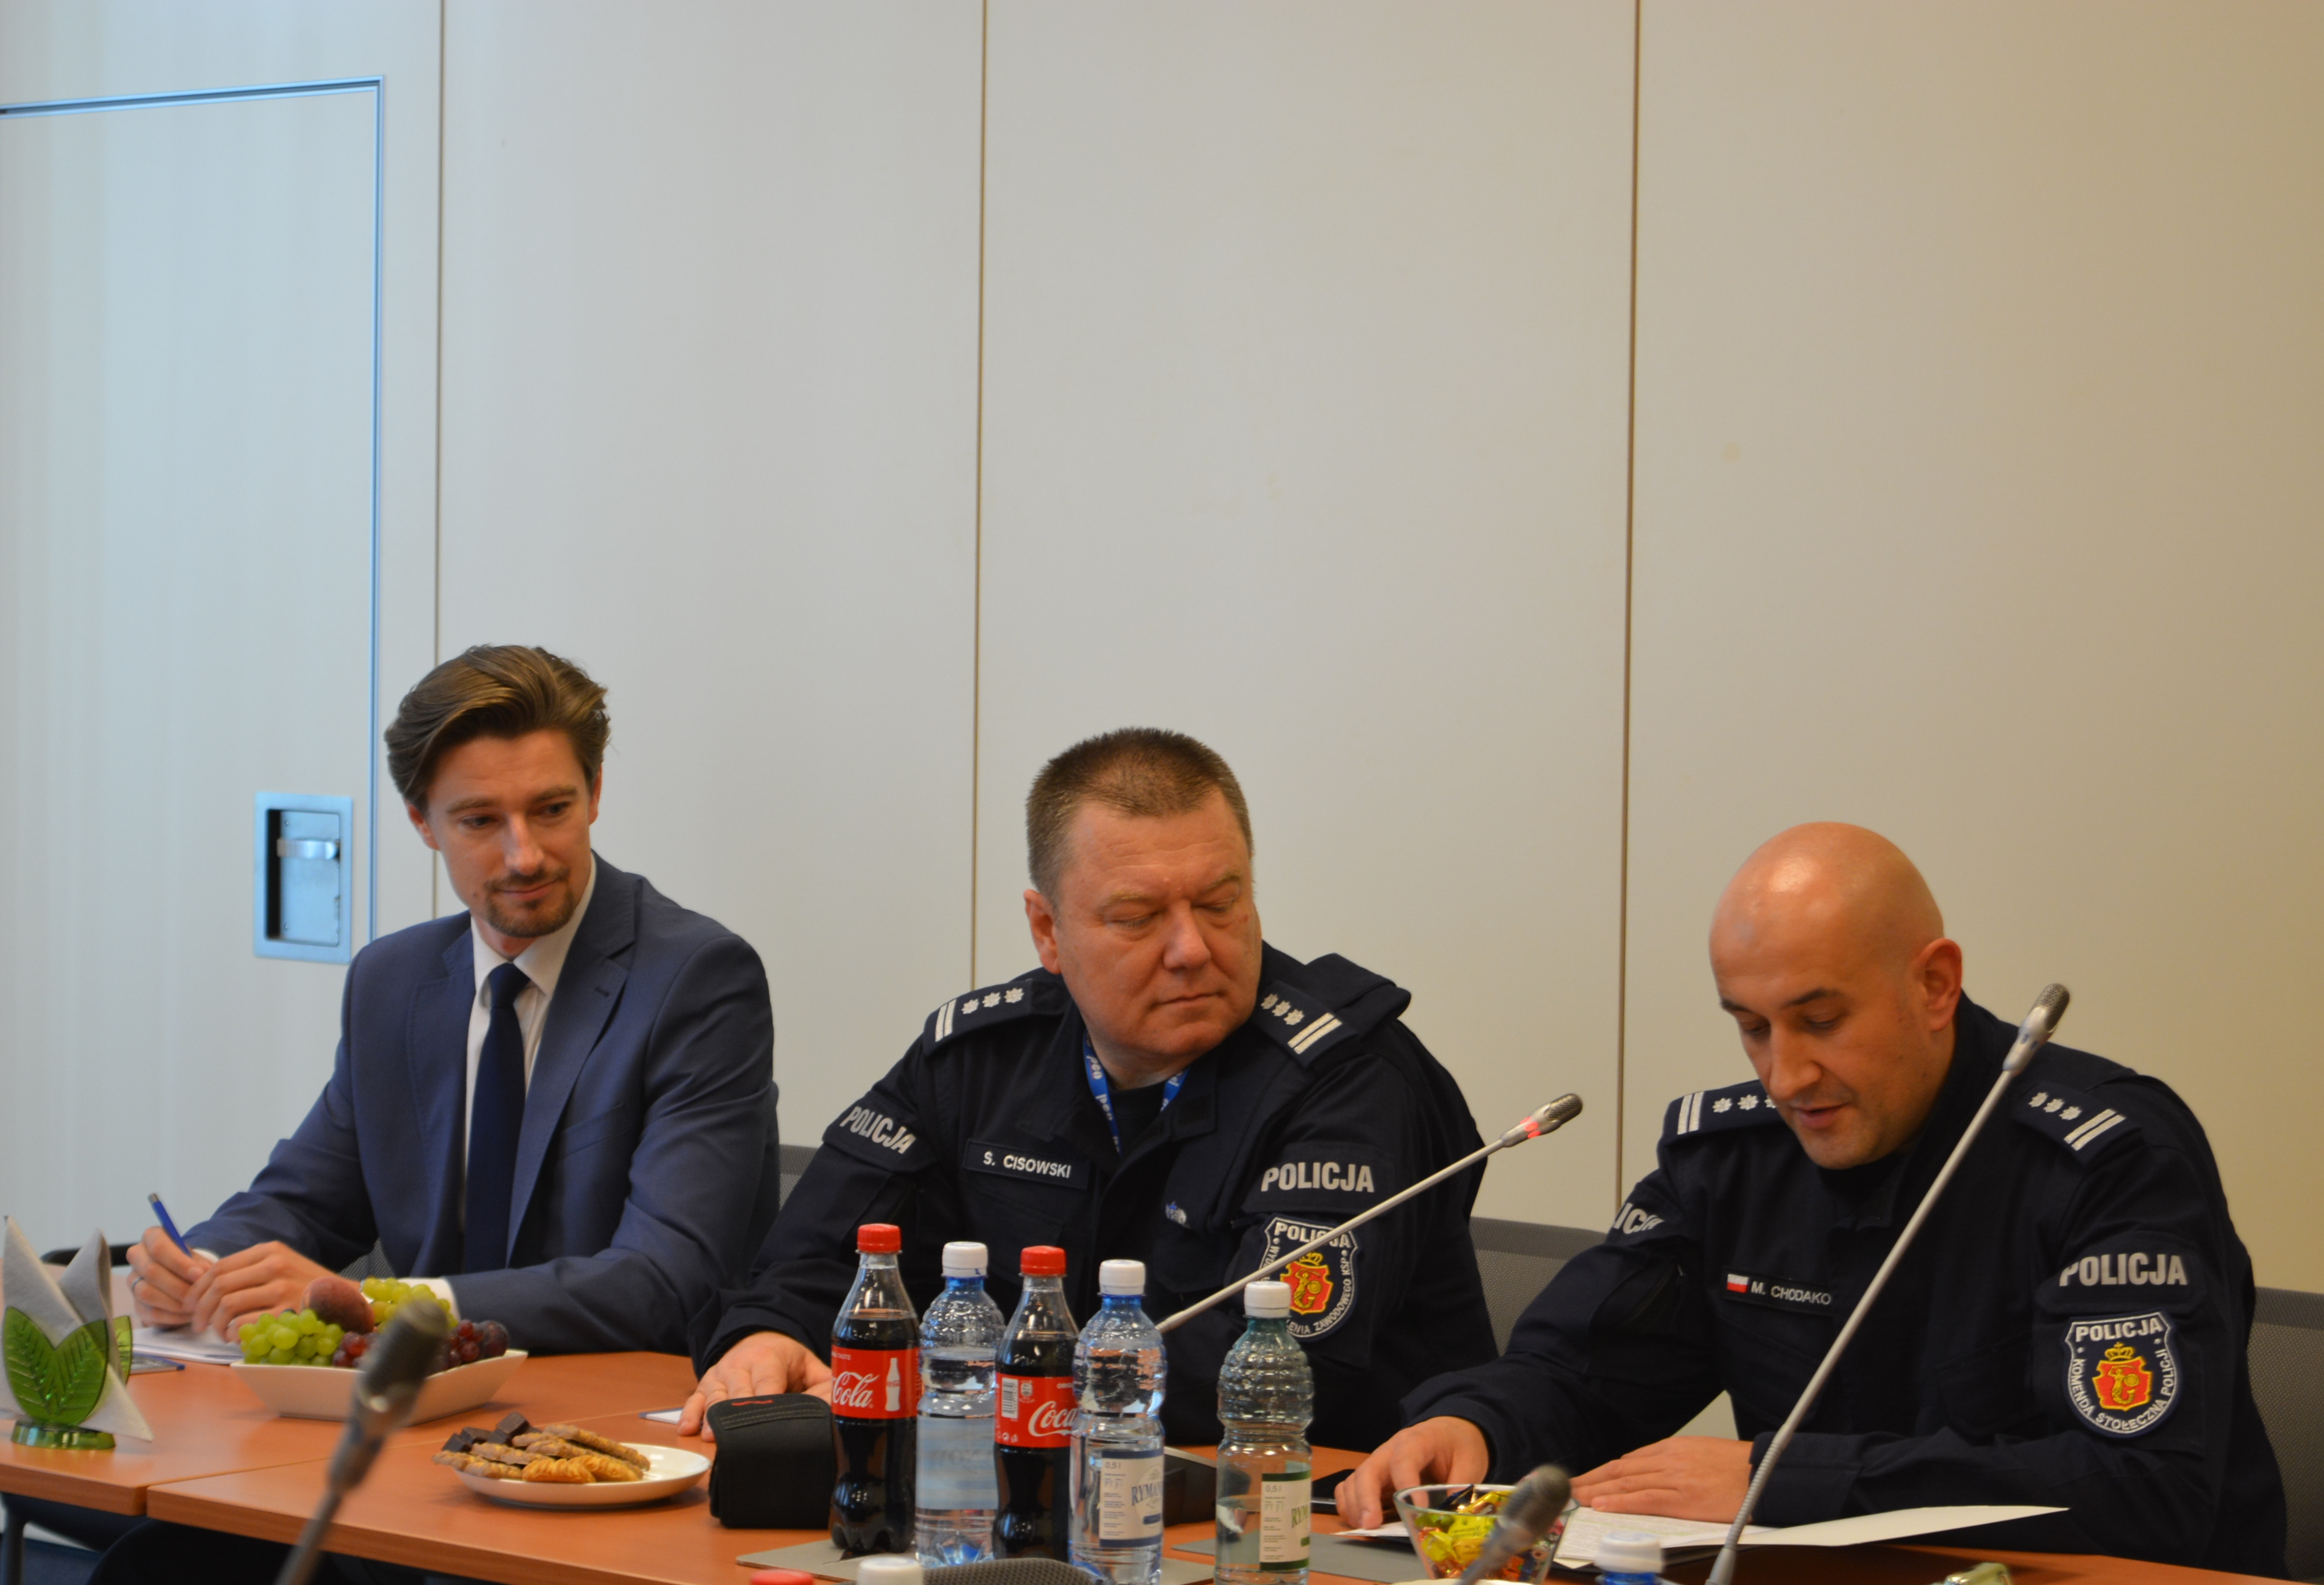 Visit of Polish Police Headquarters